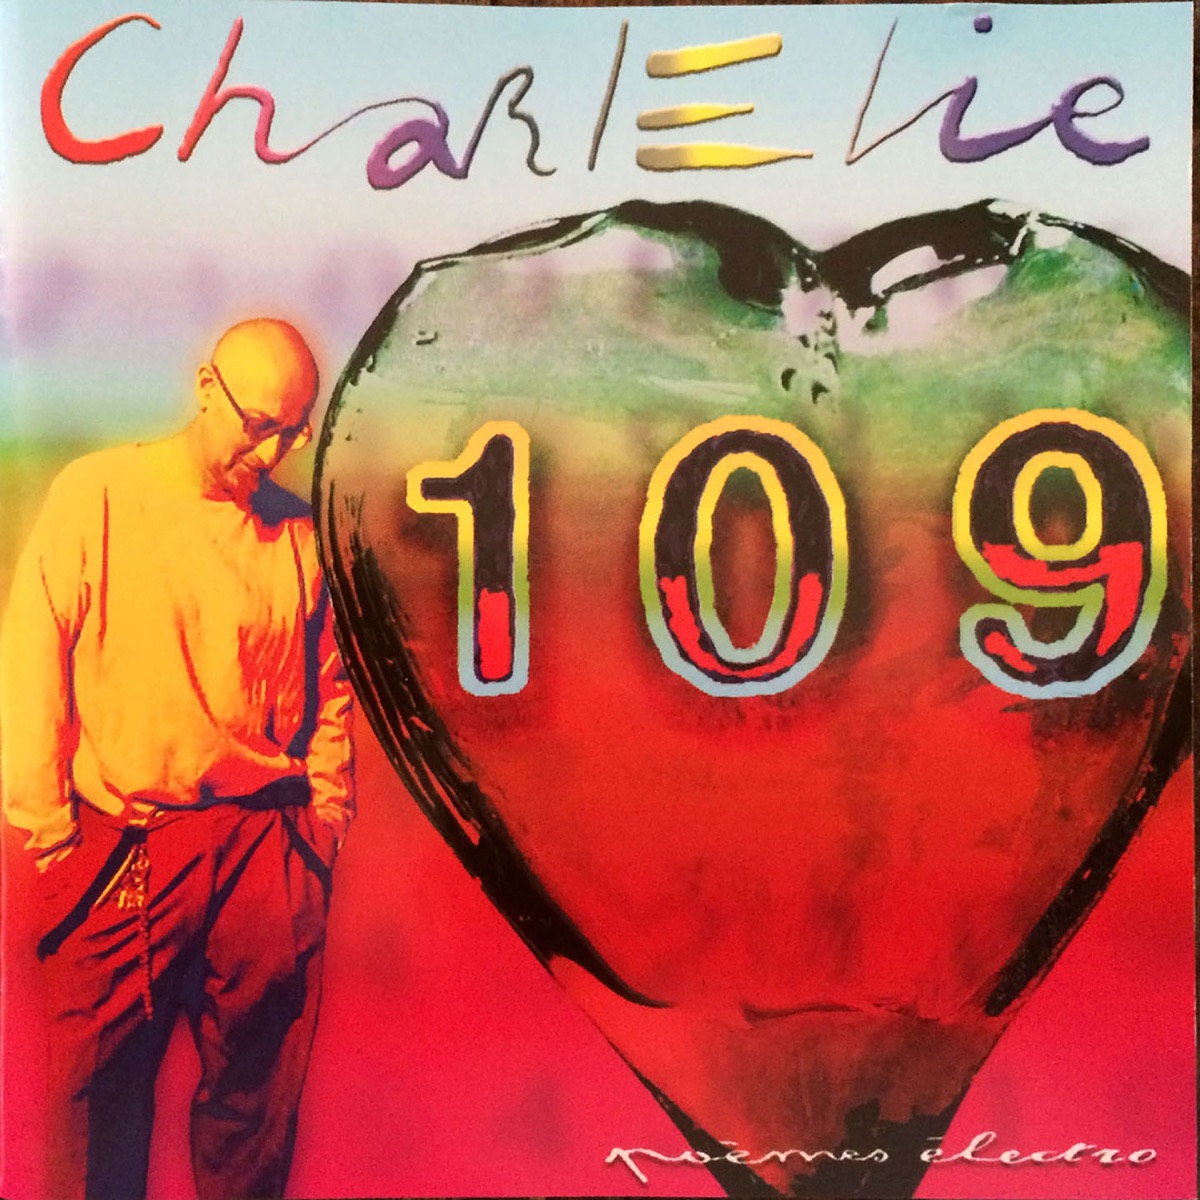 Même pas sommeil - Album by CharlElie Couture - Apple Music